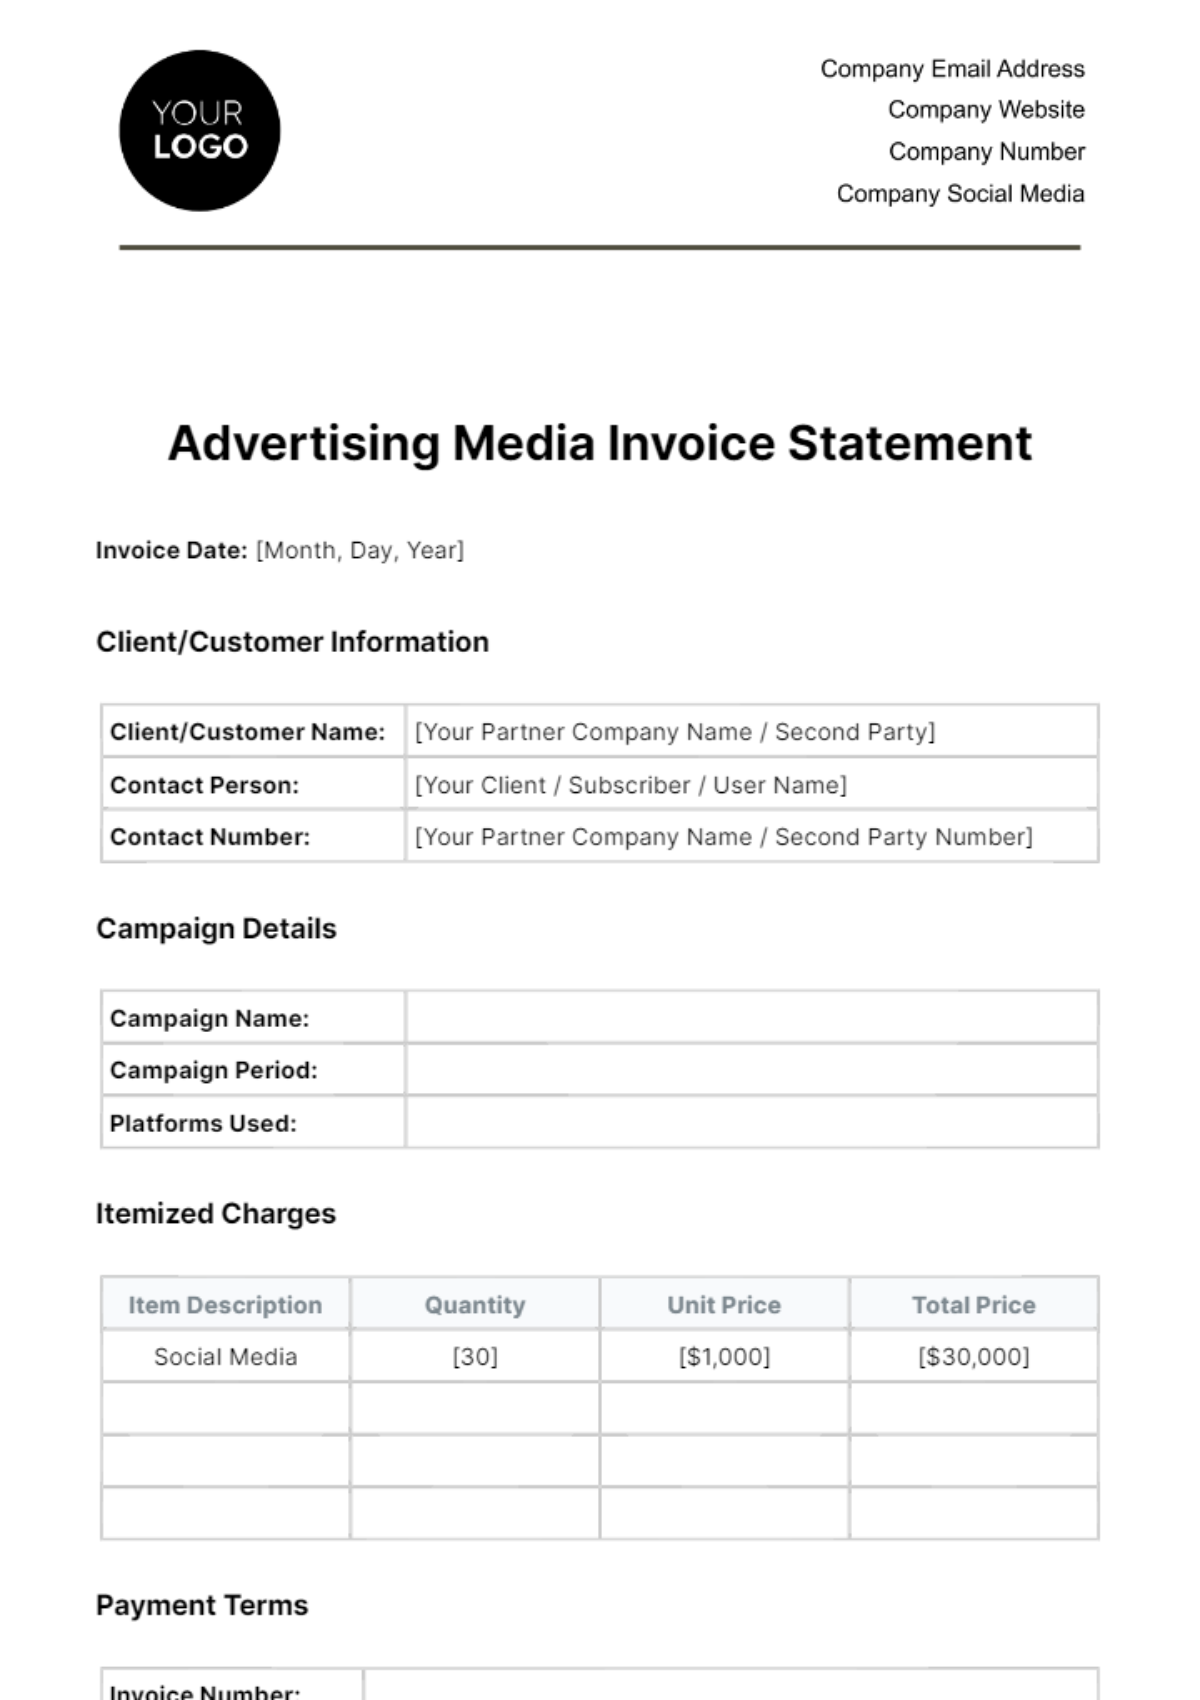 Advertising Media Invoice Statement Template